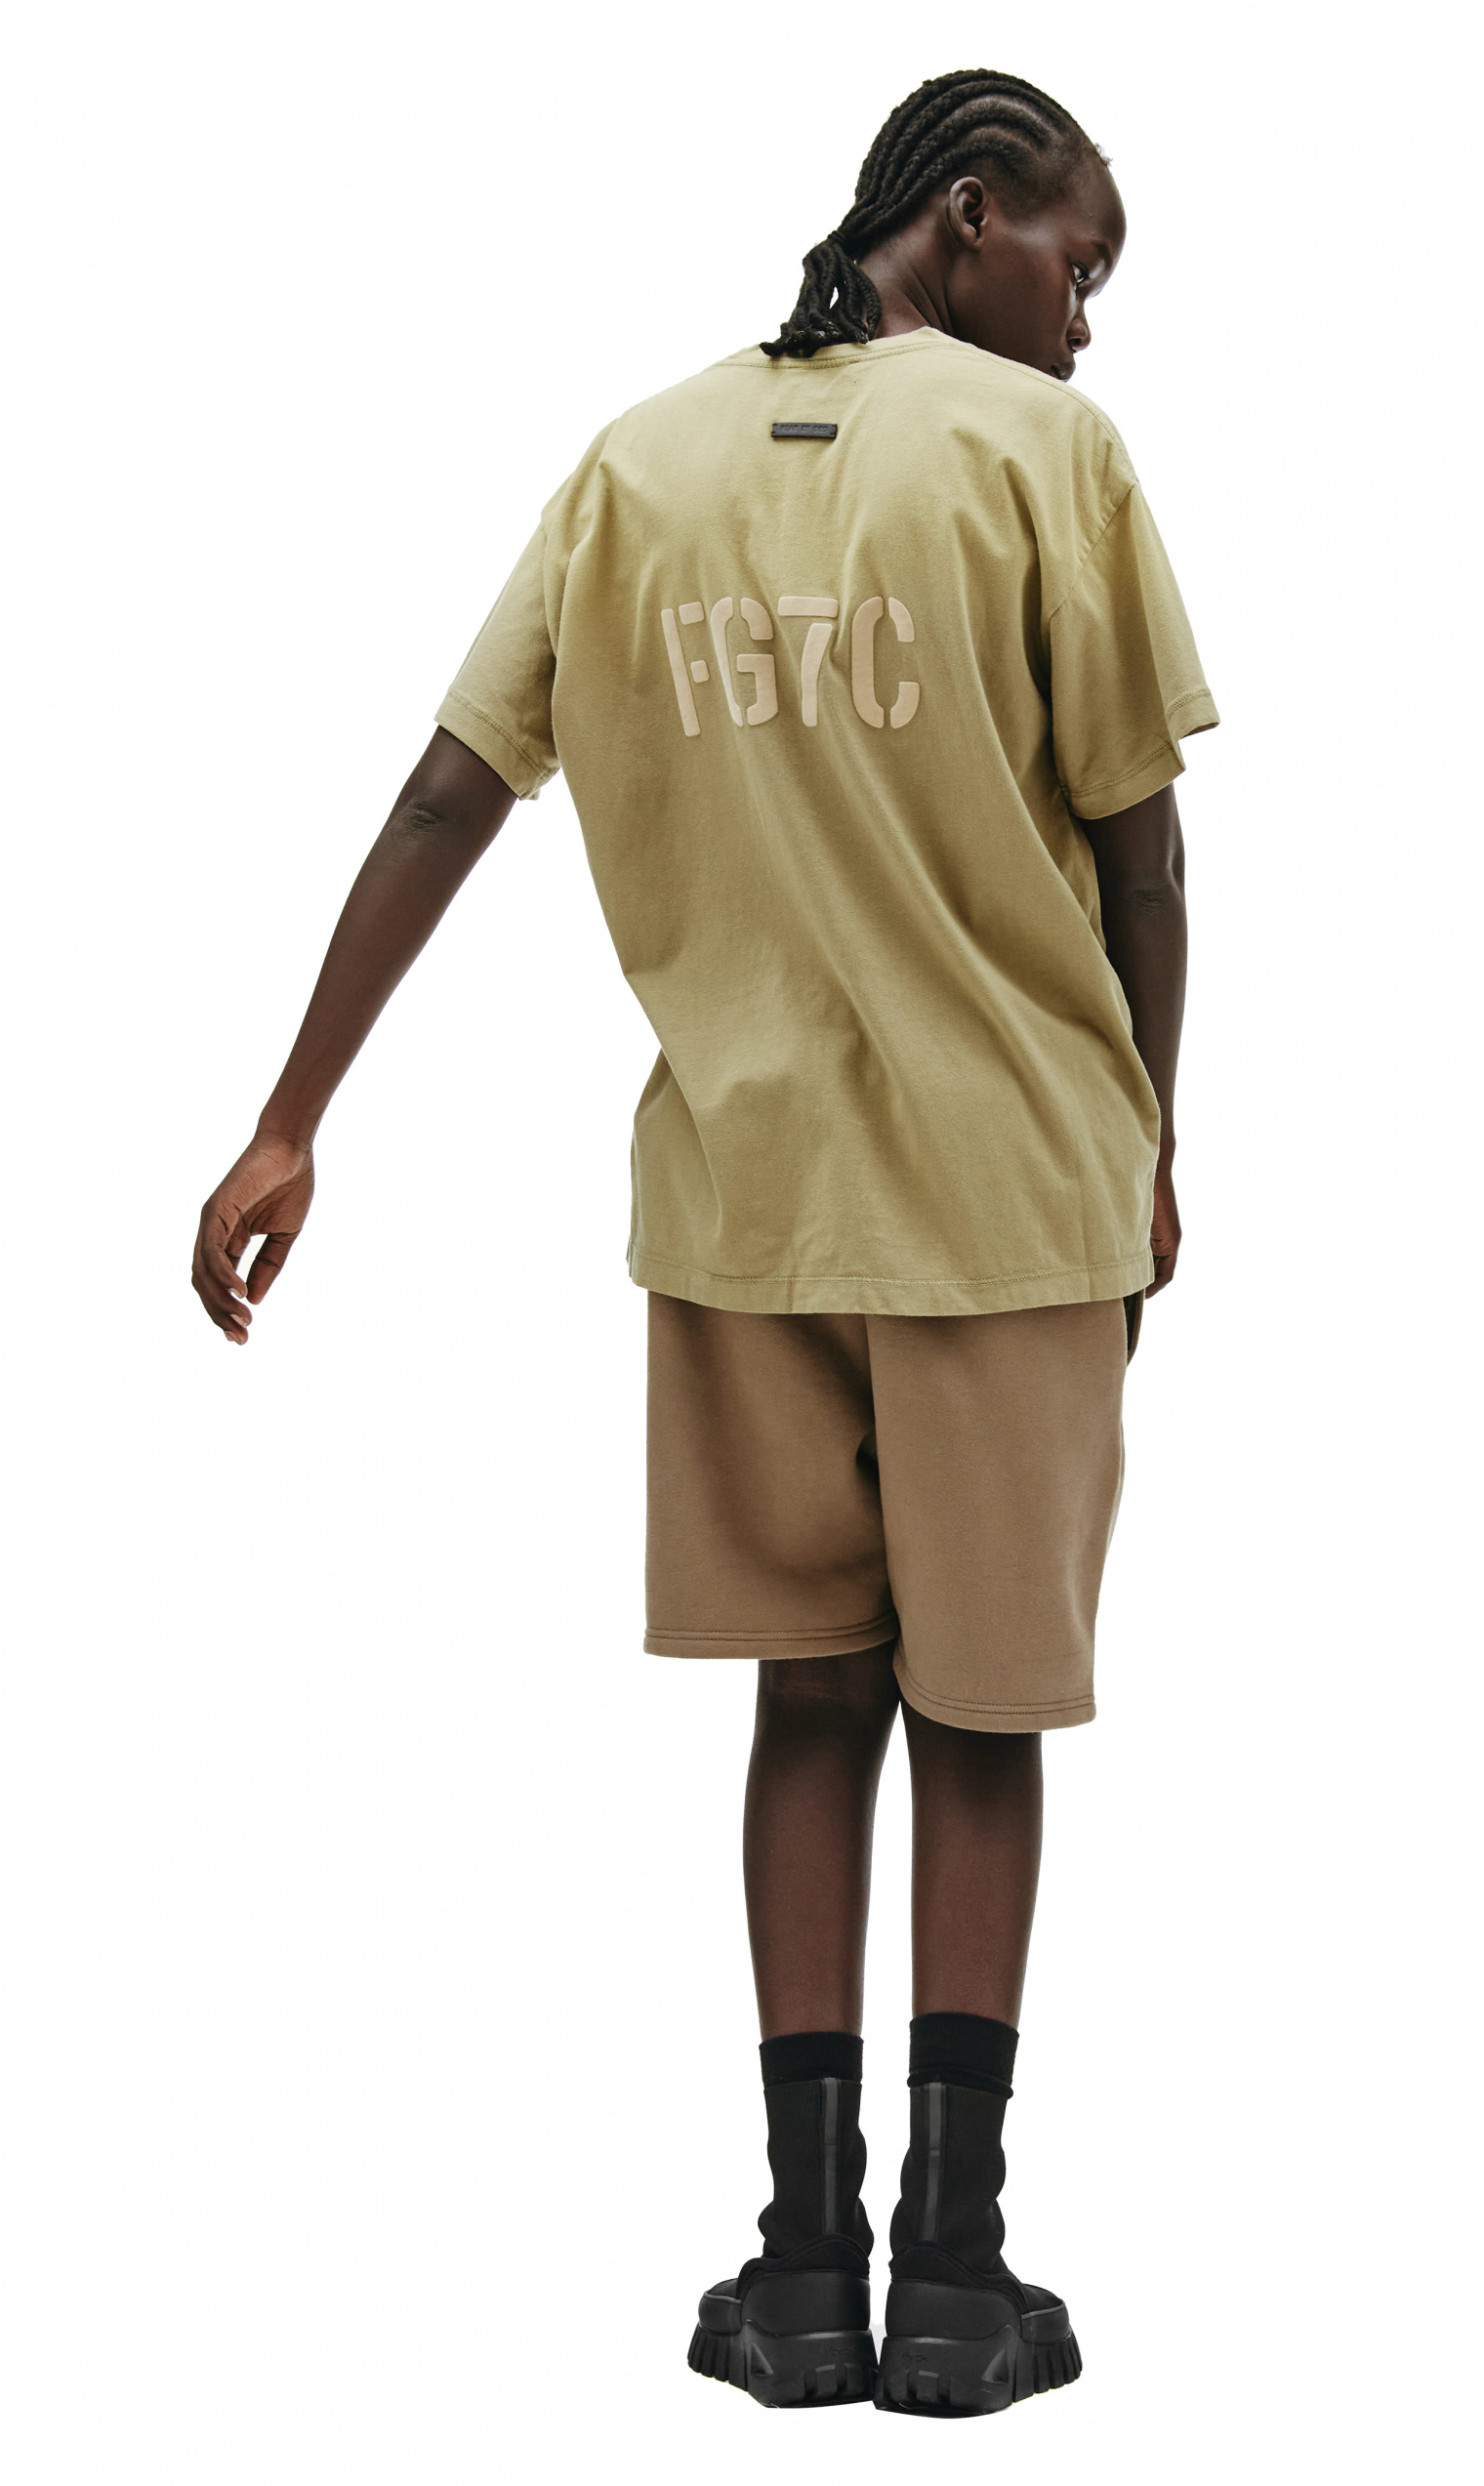 Fear of God FG7C t-shirt in vintage khaki